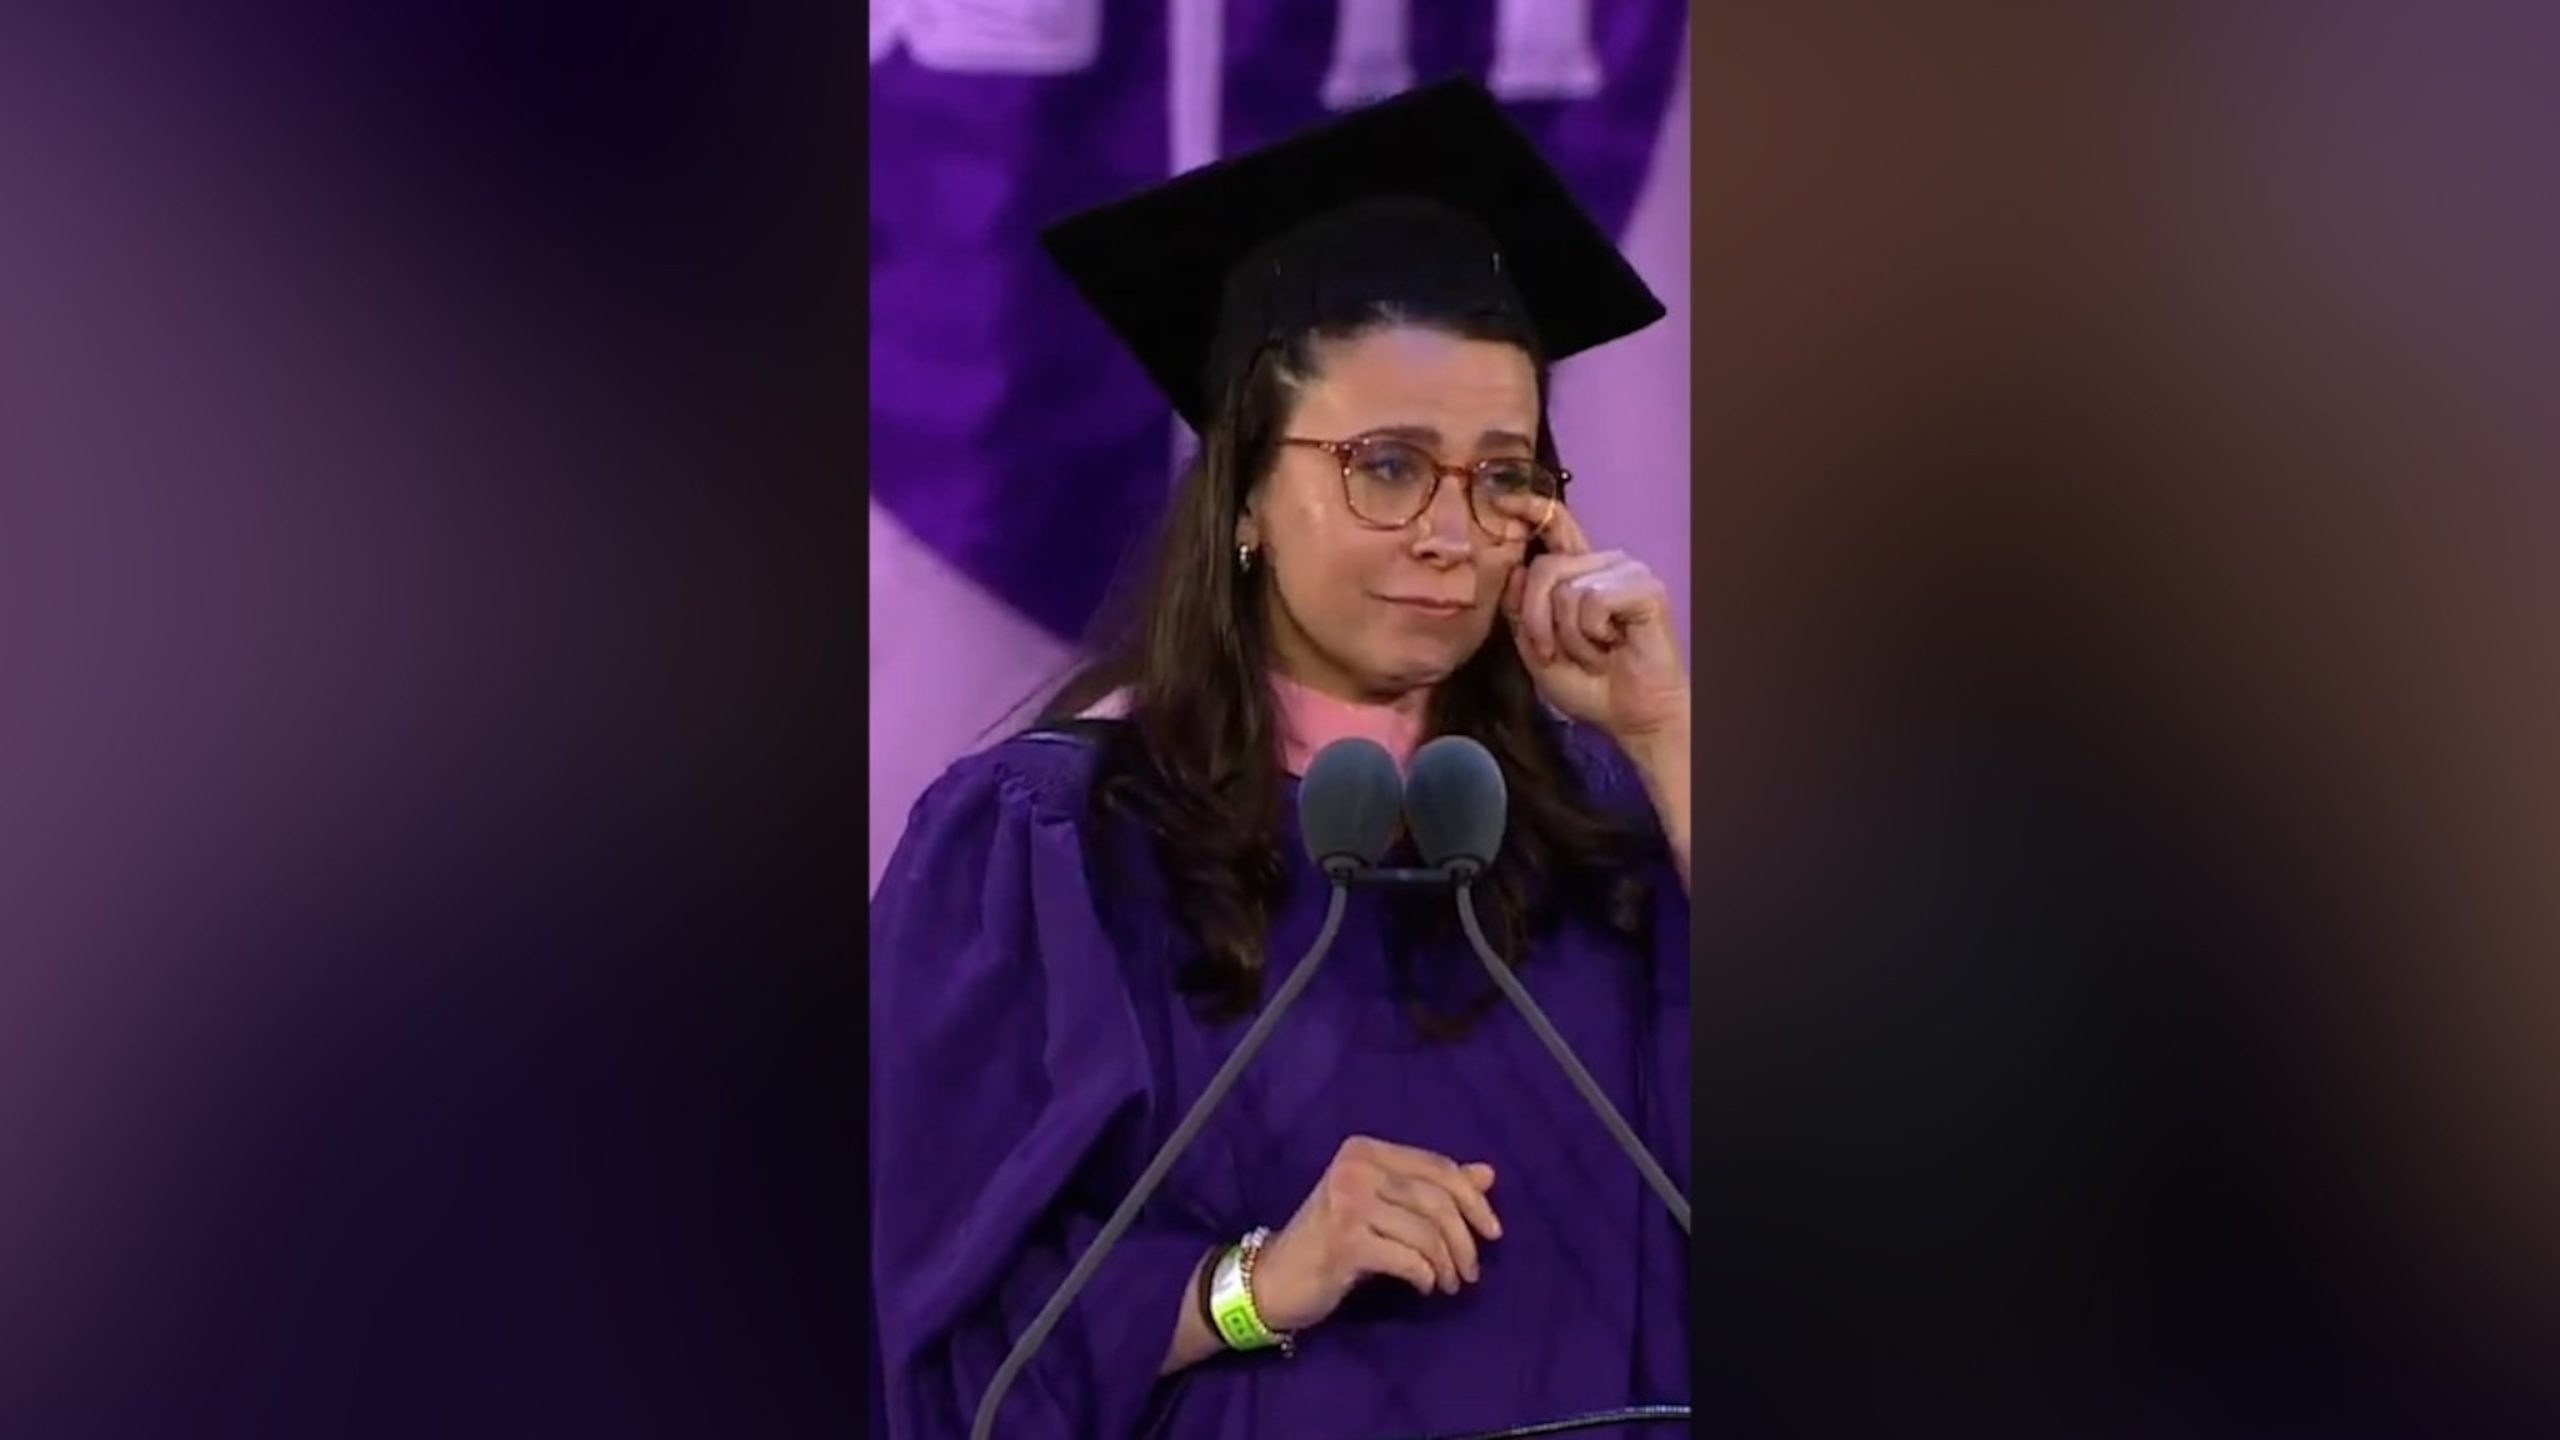 Rachel delivers a heartfelt commencement speech at NYU's Steinhardt School